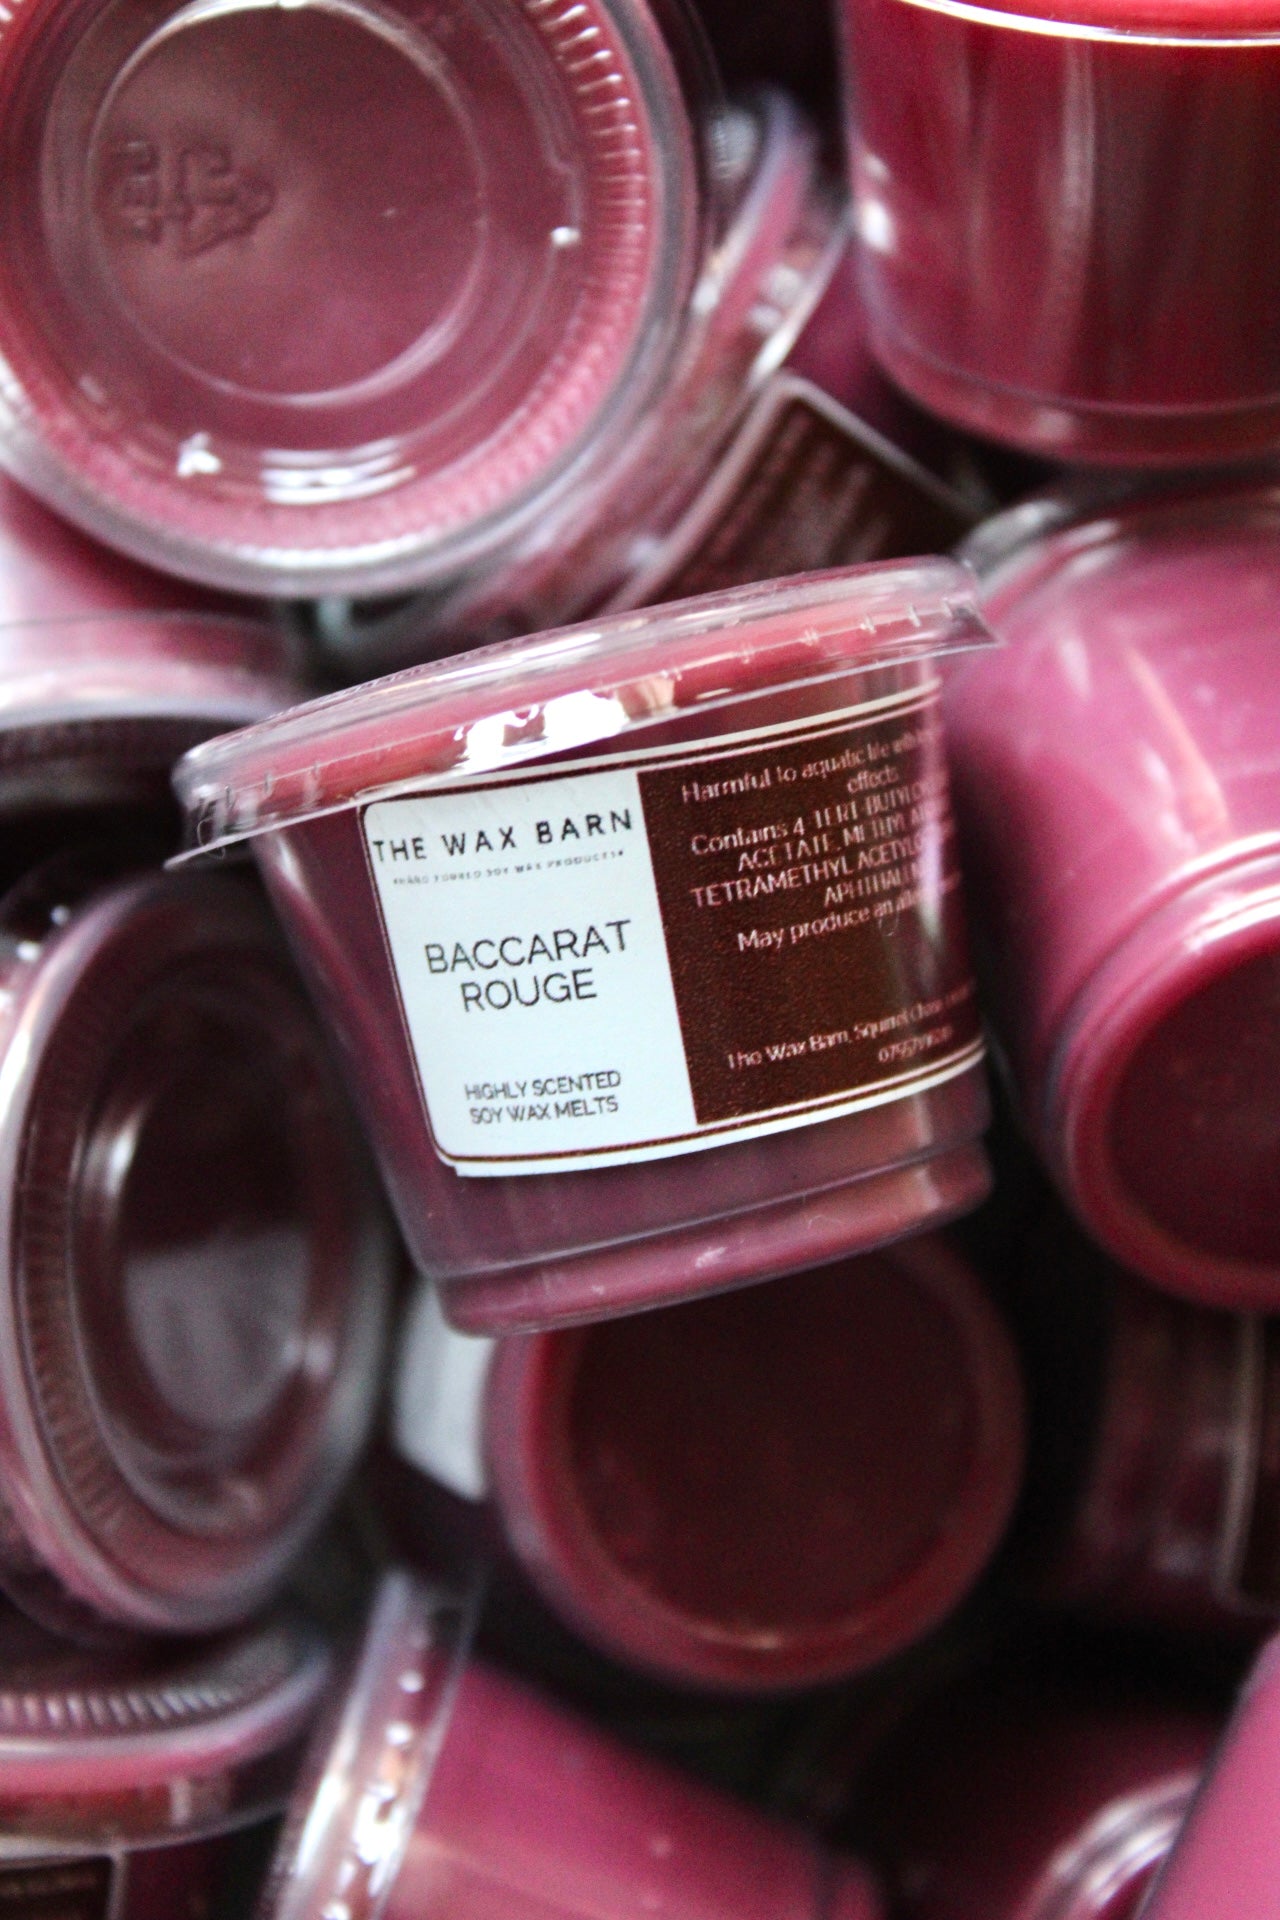 Baccarat Rouge (Baccarat Rouge 540 Inspired) Sample Pot